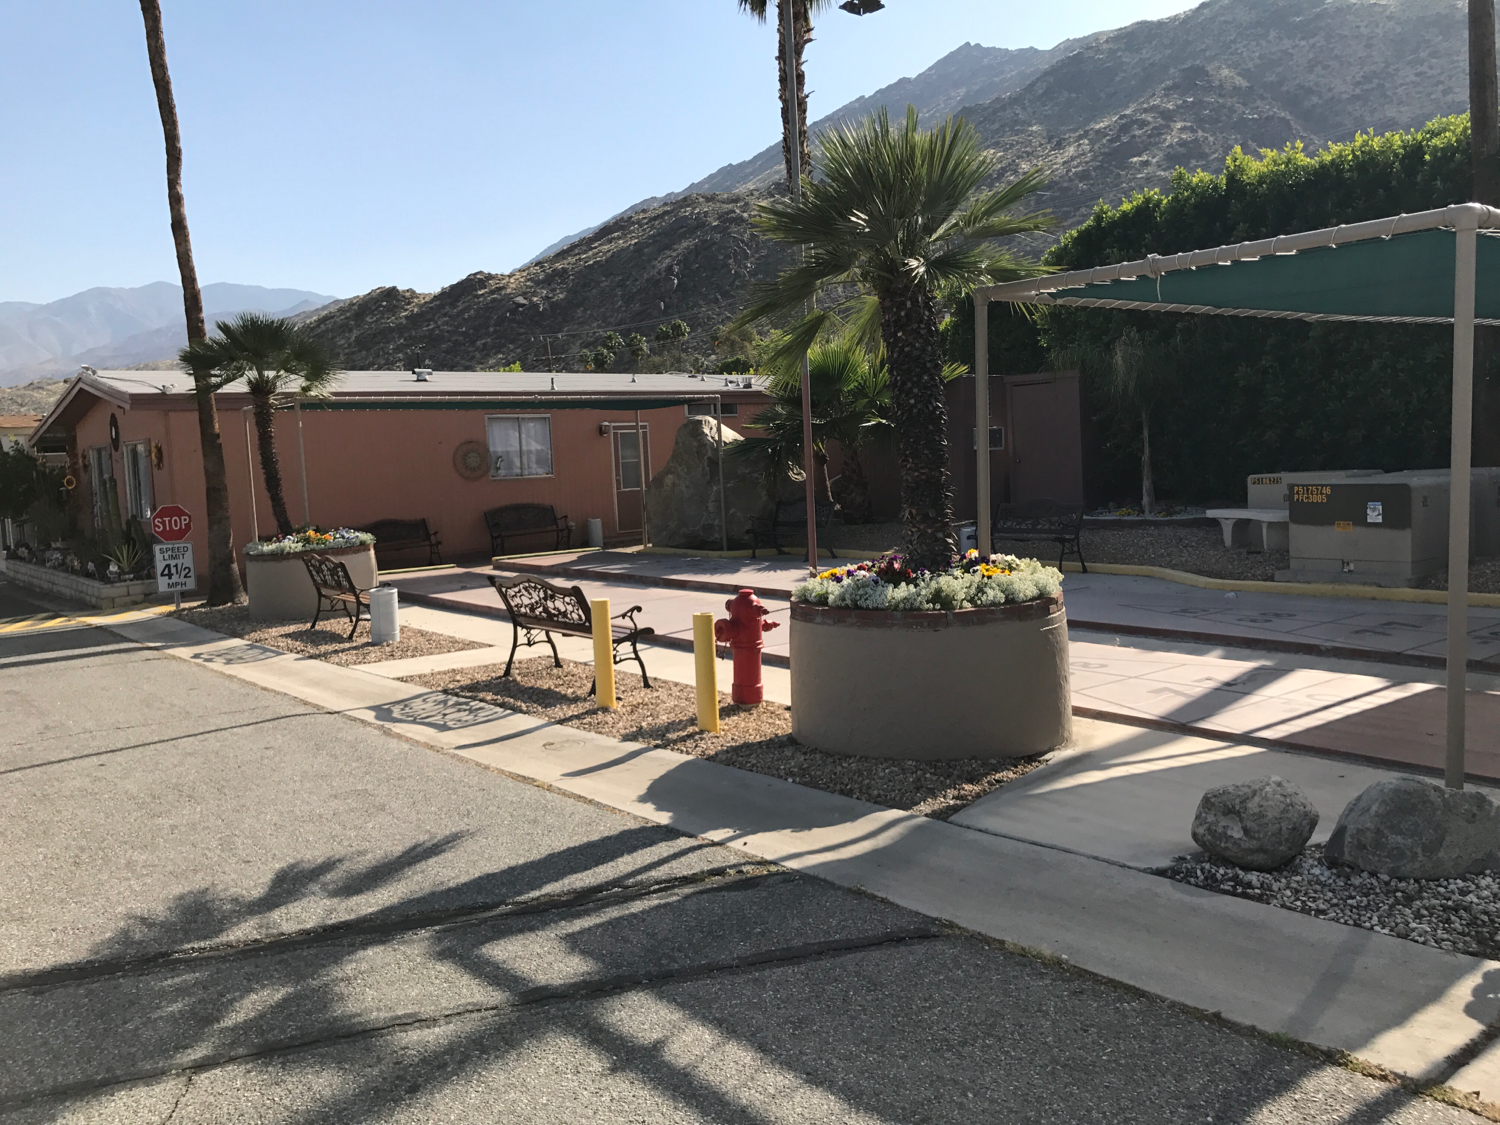 Palm Springs RV Parks Reviews and Photos